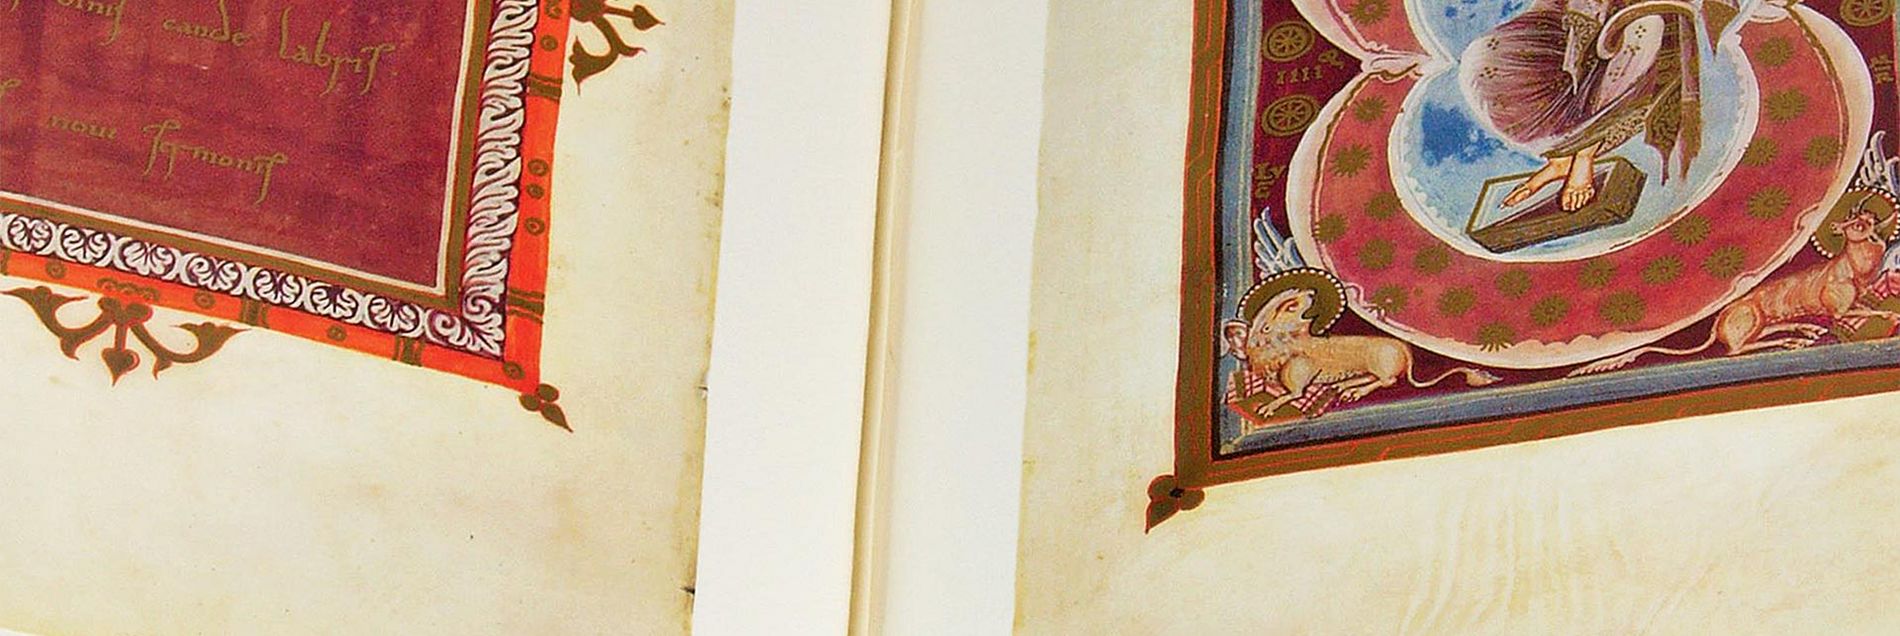 <i>“Eine ottonische Prachthandschrift aus Köln, geschmückt mit 58 großformatigen Miniaturen”</i>